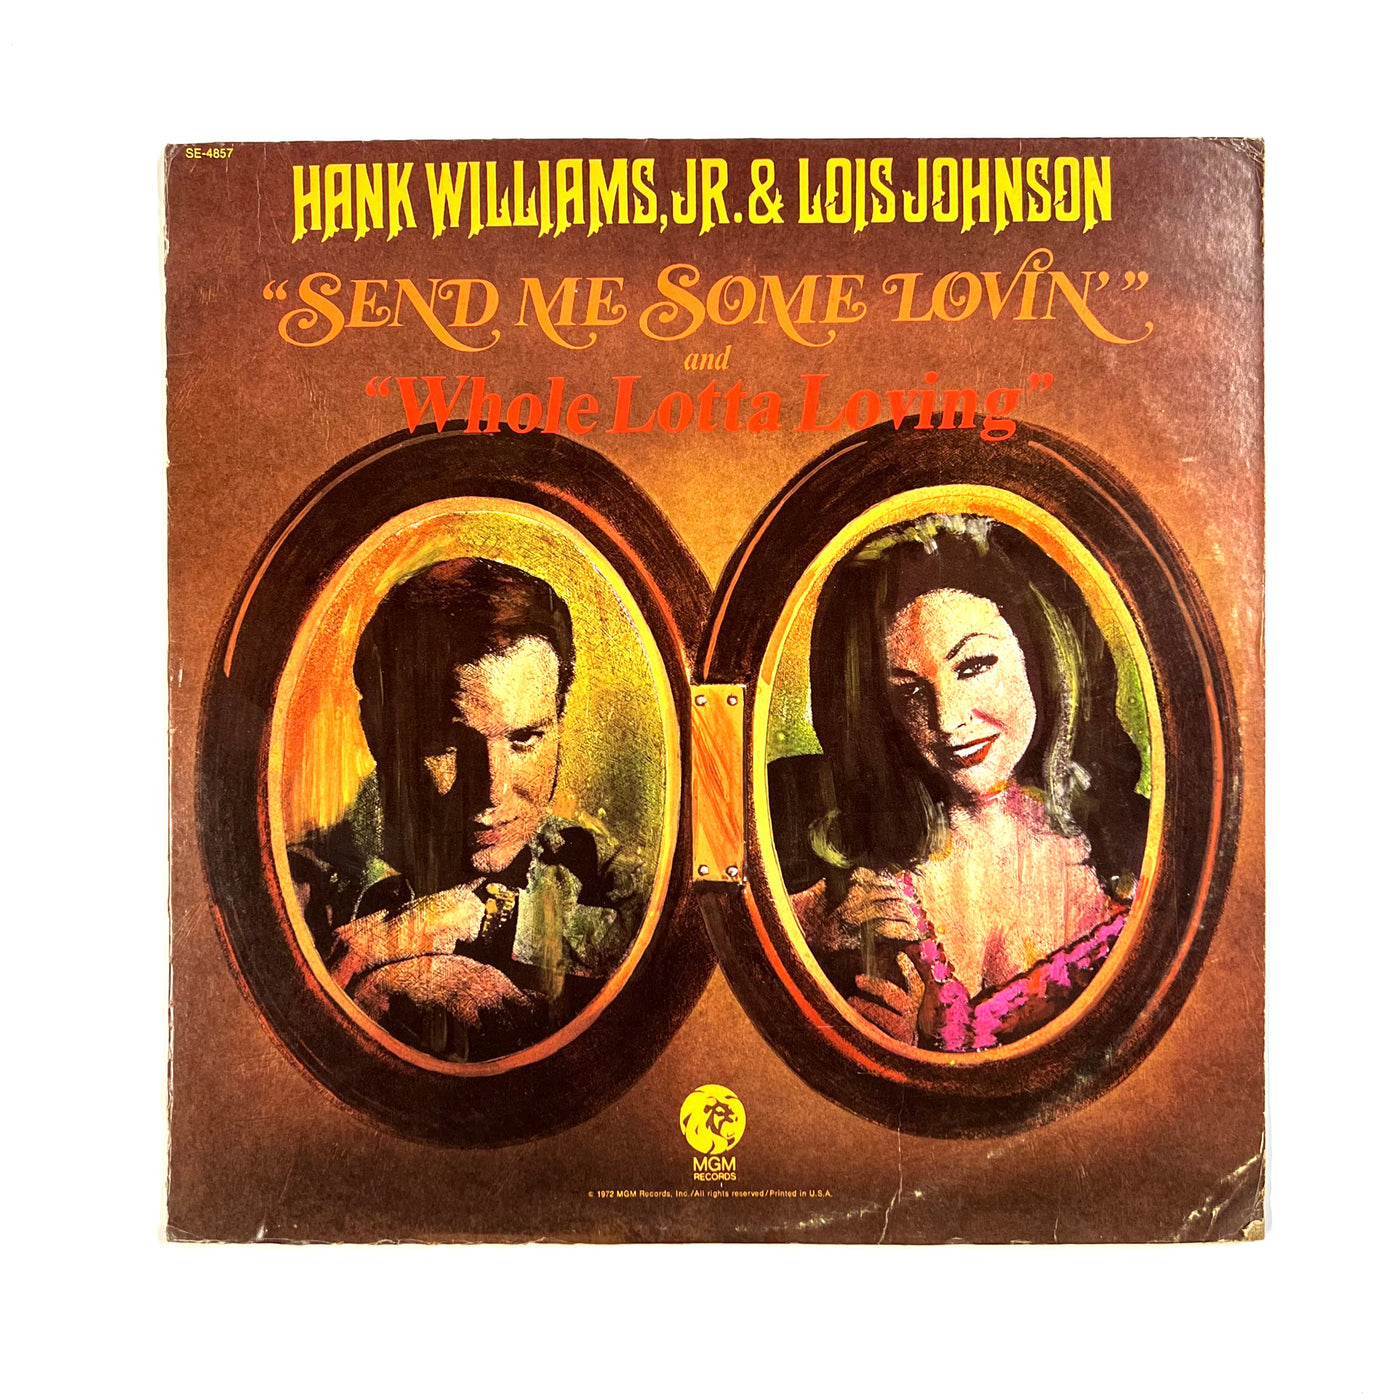 Hank Williams Jr. & Lois Johnson - Whole Lotta Loving